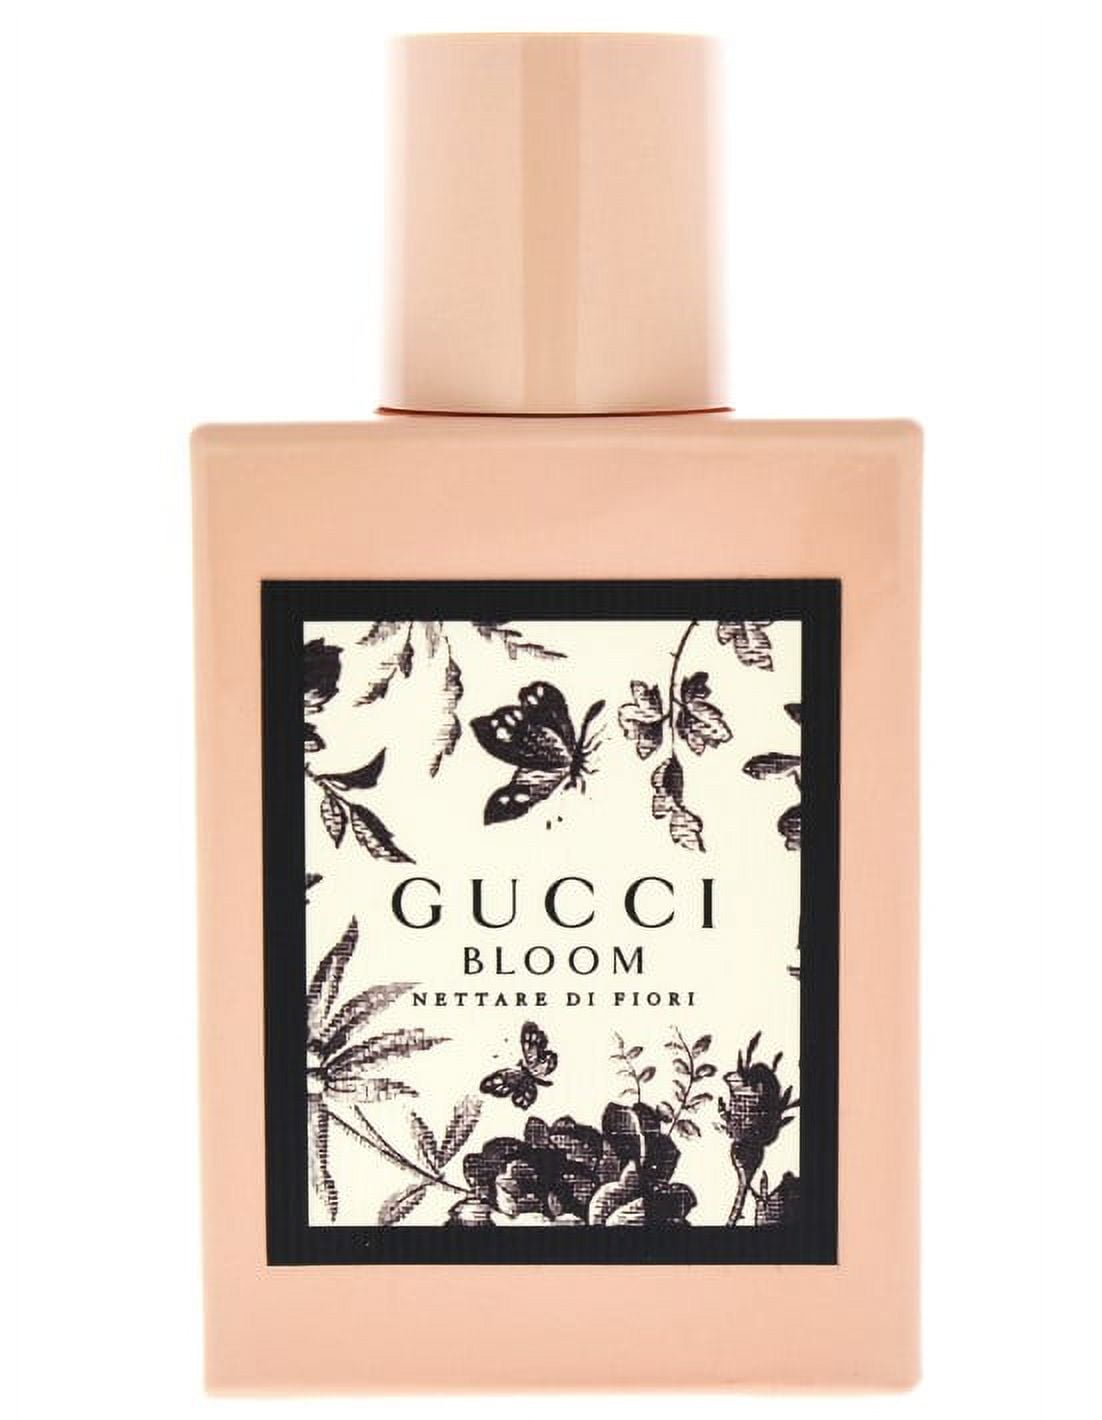 Gucci Bloom Nettare di Fiori by Gucci Eau De Parfum Intense Spray